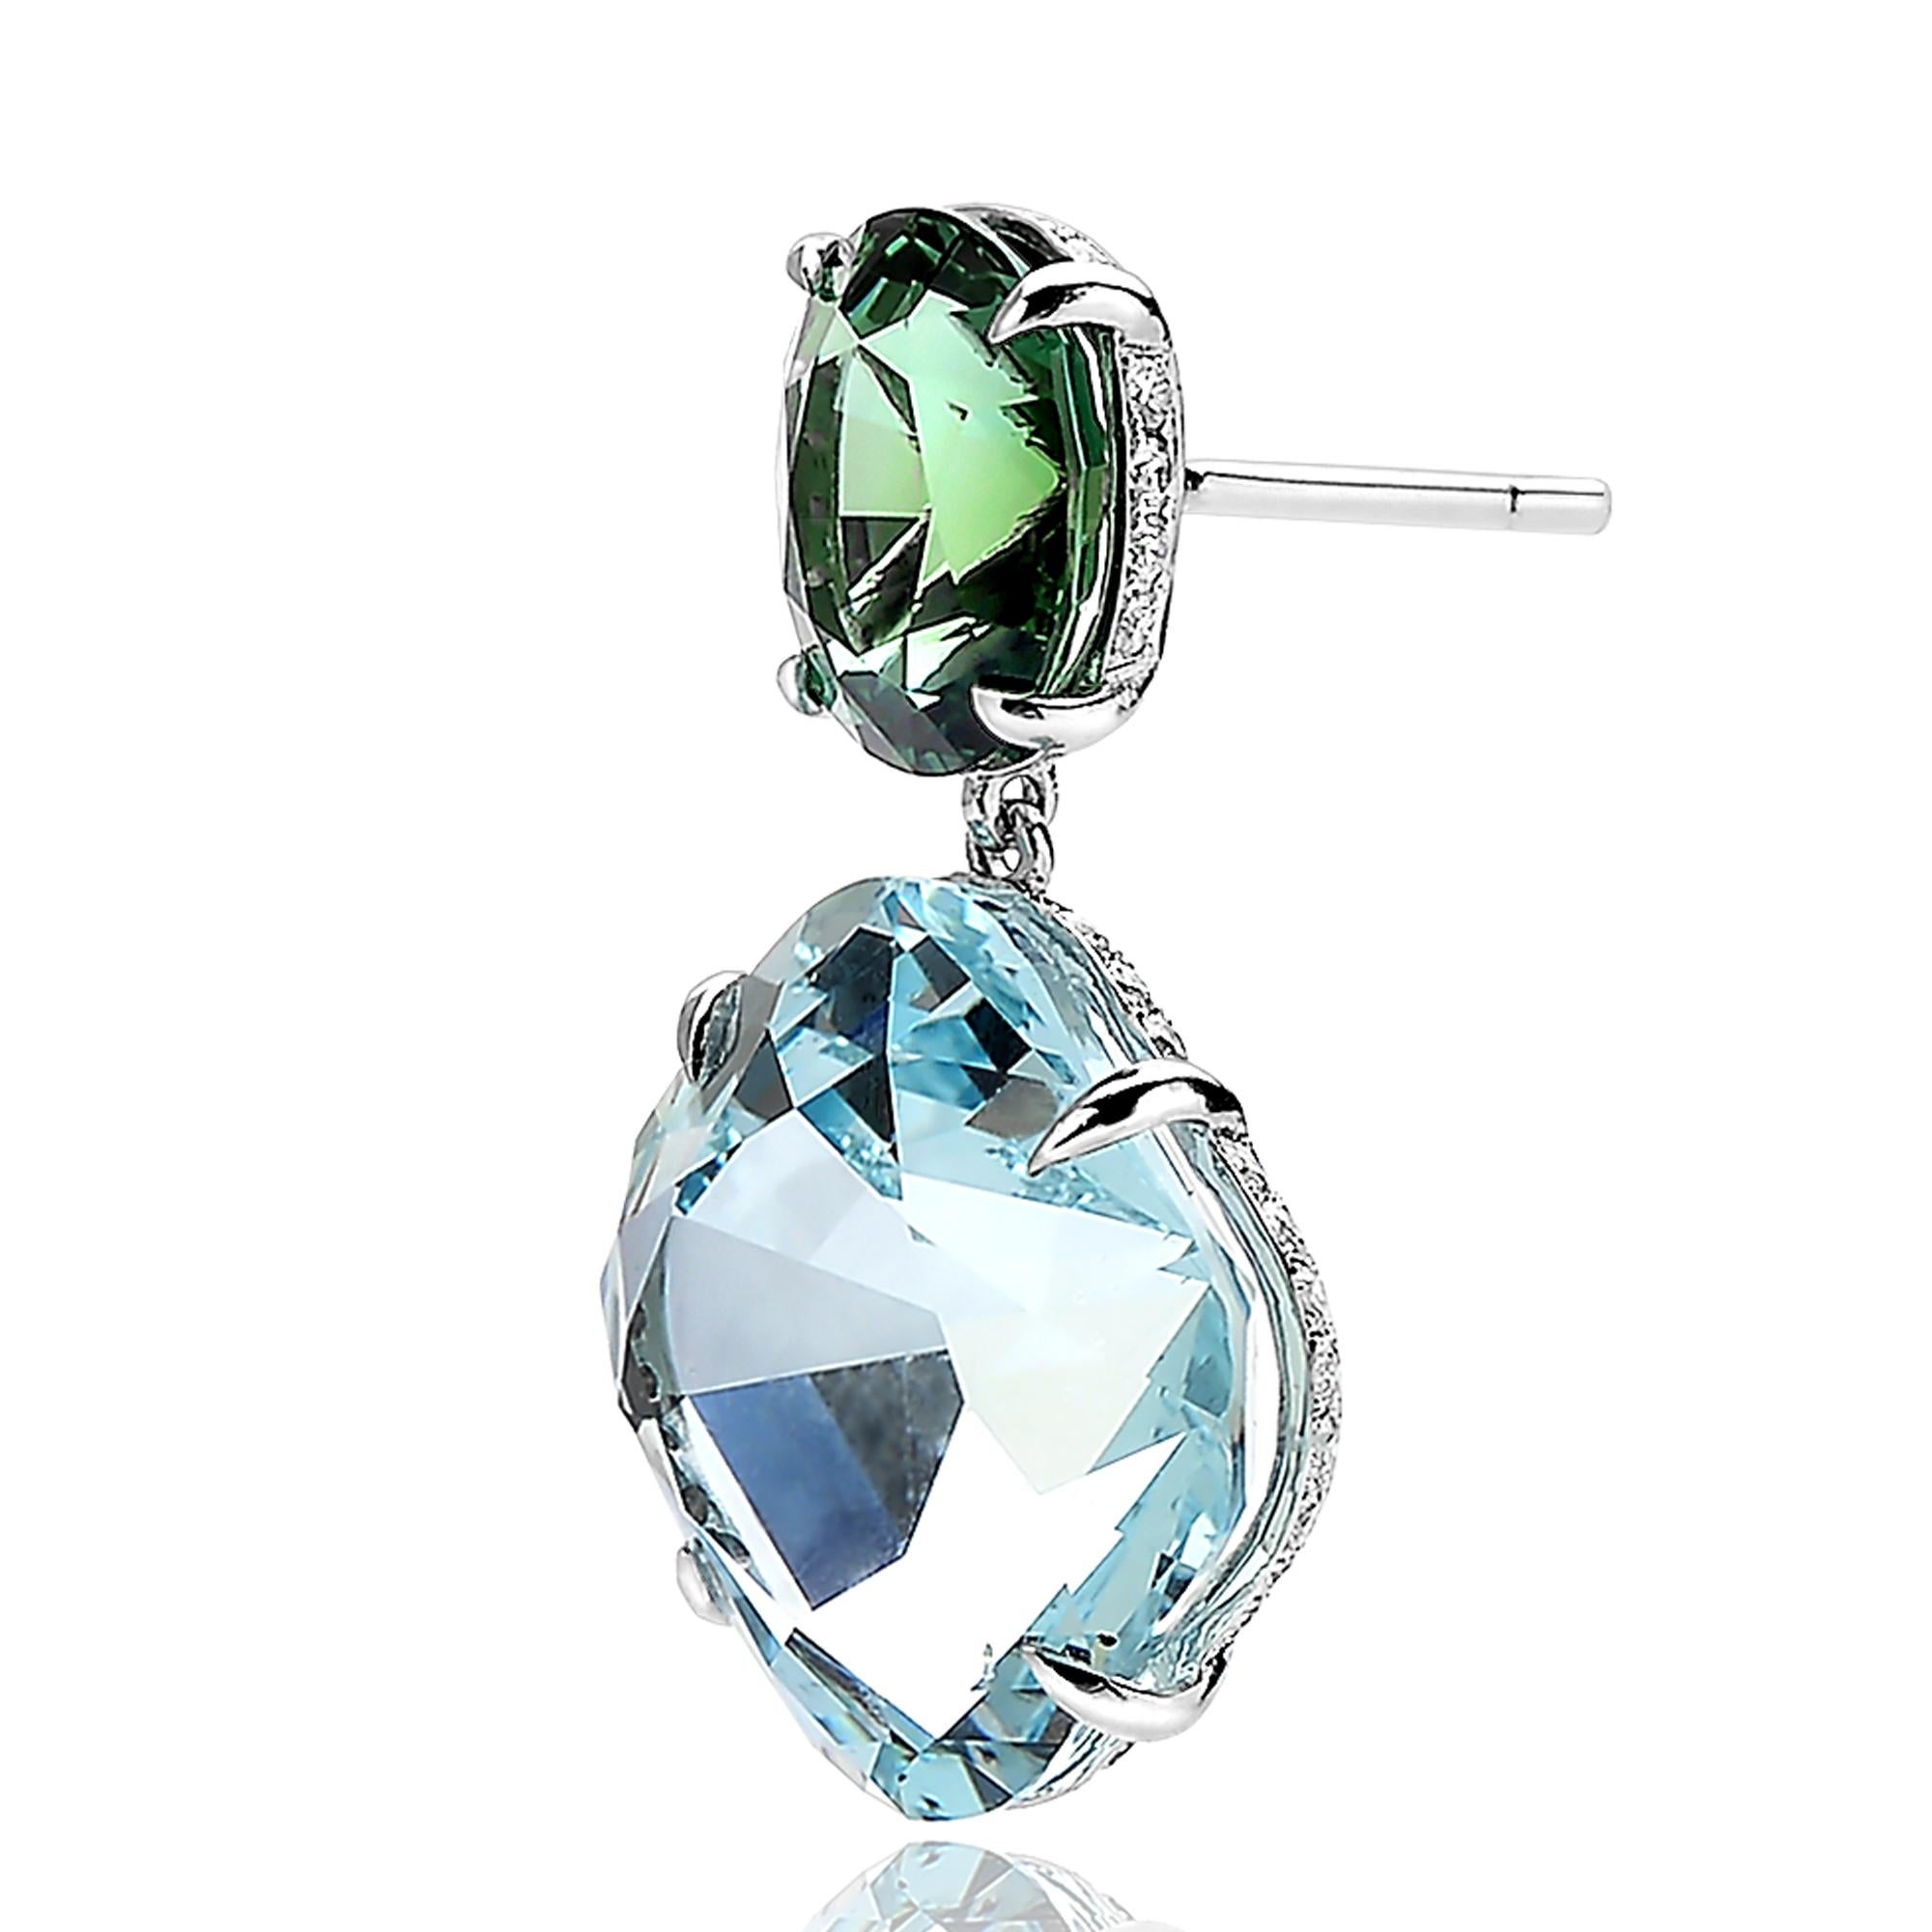 Aquamarine 25.97 Carat, Green Tourmaline 5.89 Carat & Diamond 0.67 Carat Earring (Zeitgenössisch)